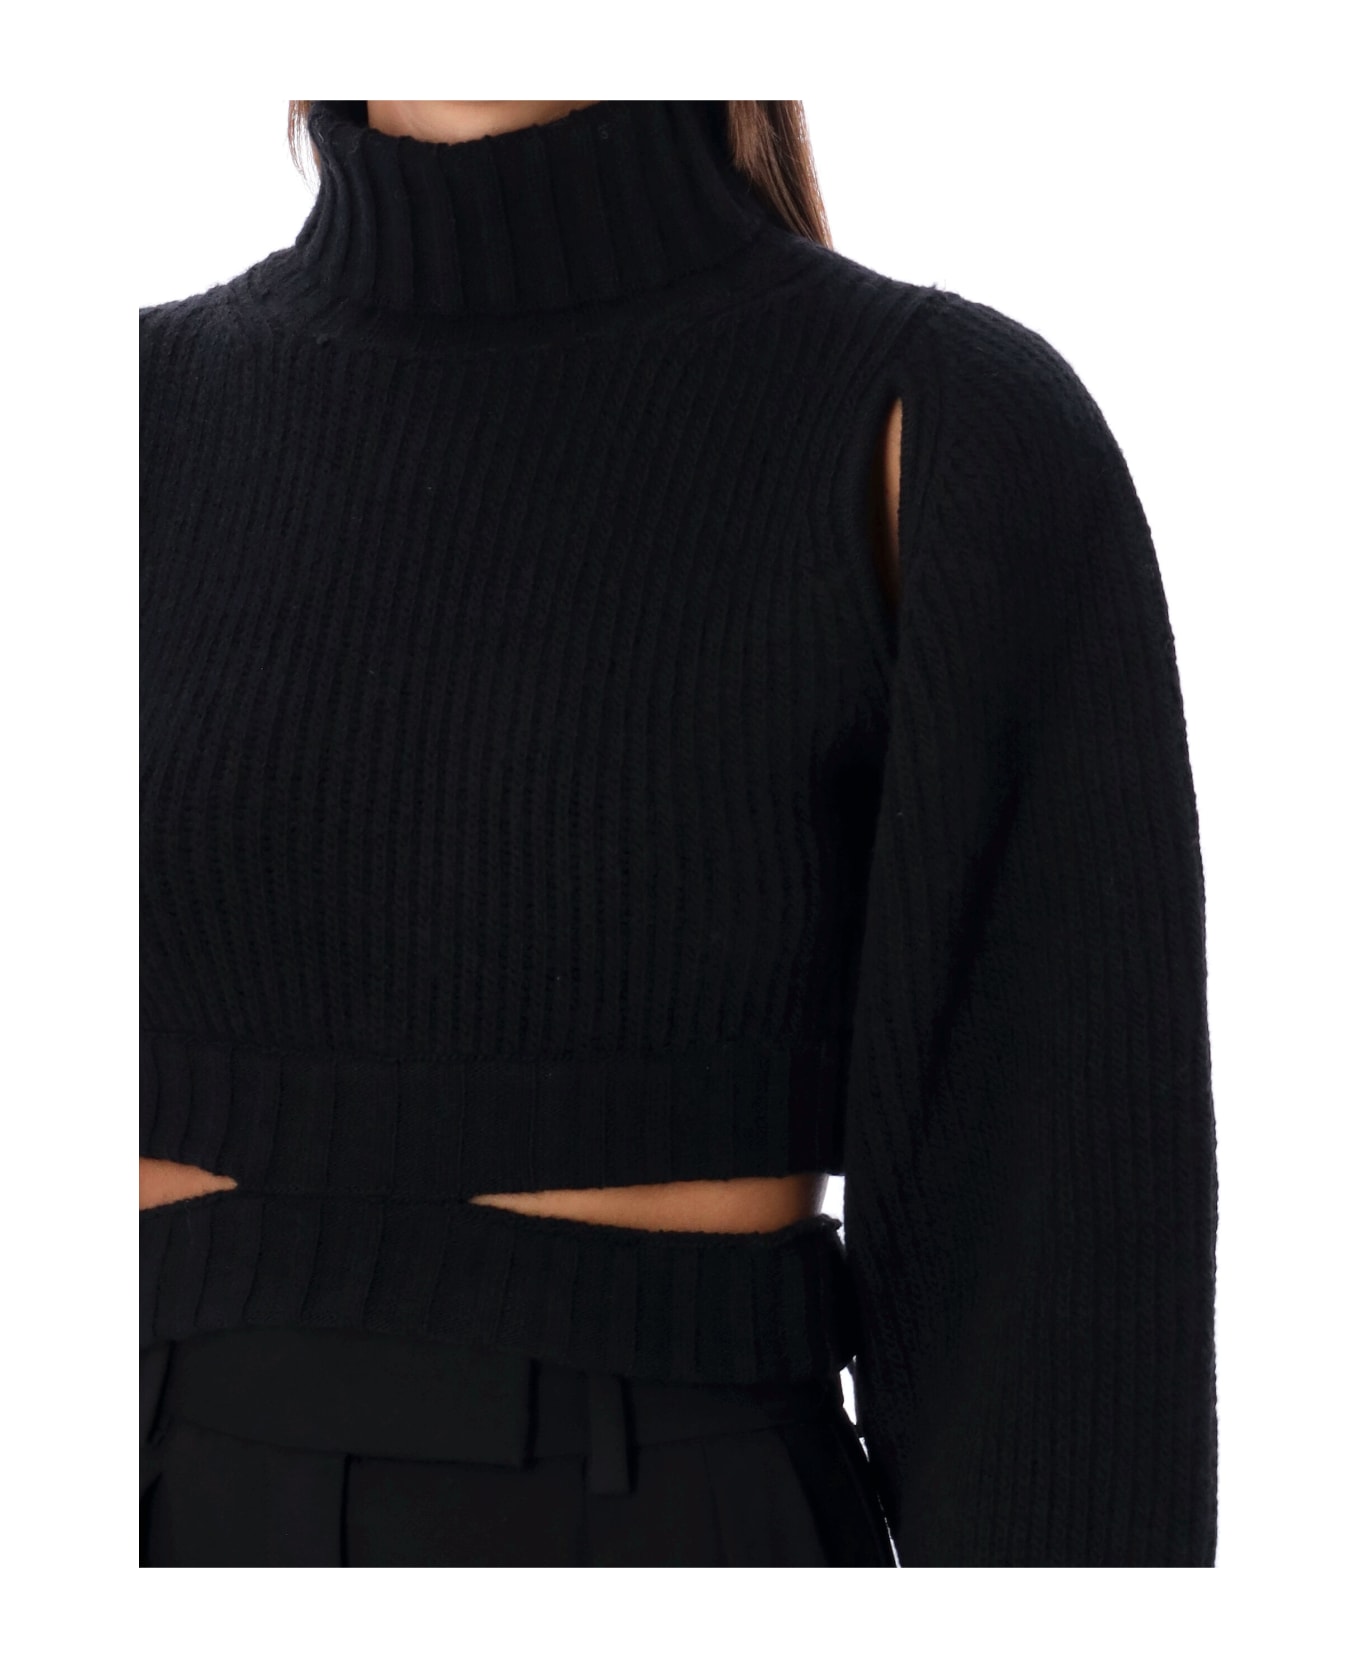 ANDREĀDAMO Cropped Knit Sweater - BLACK ニットウェア